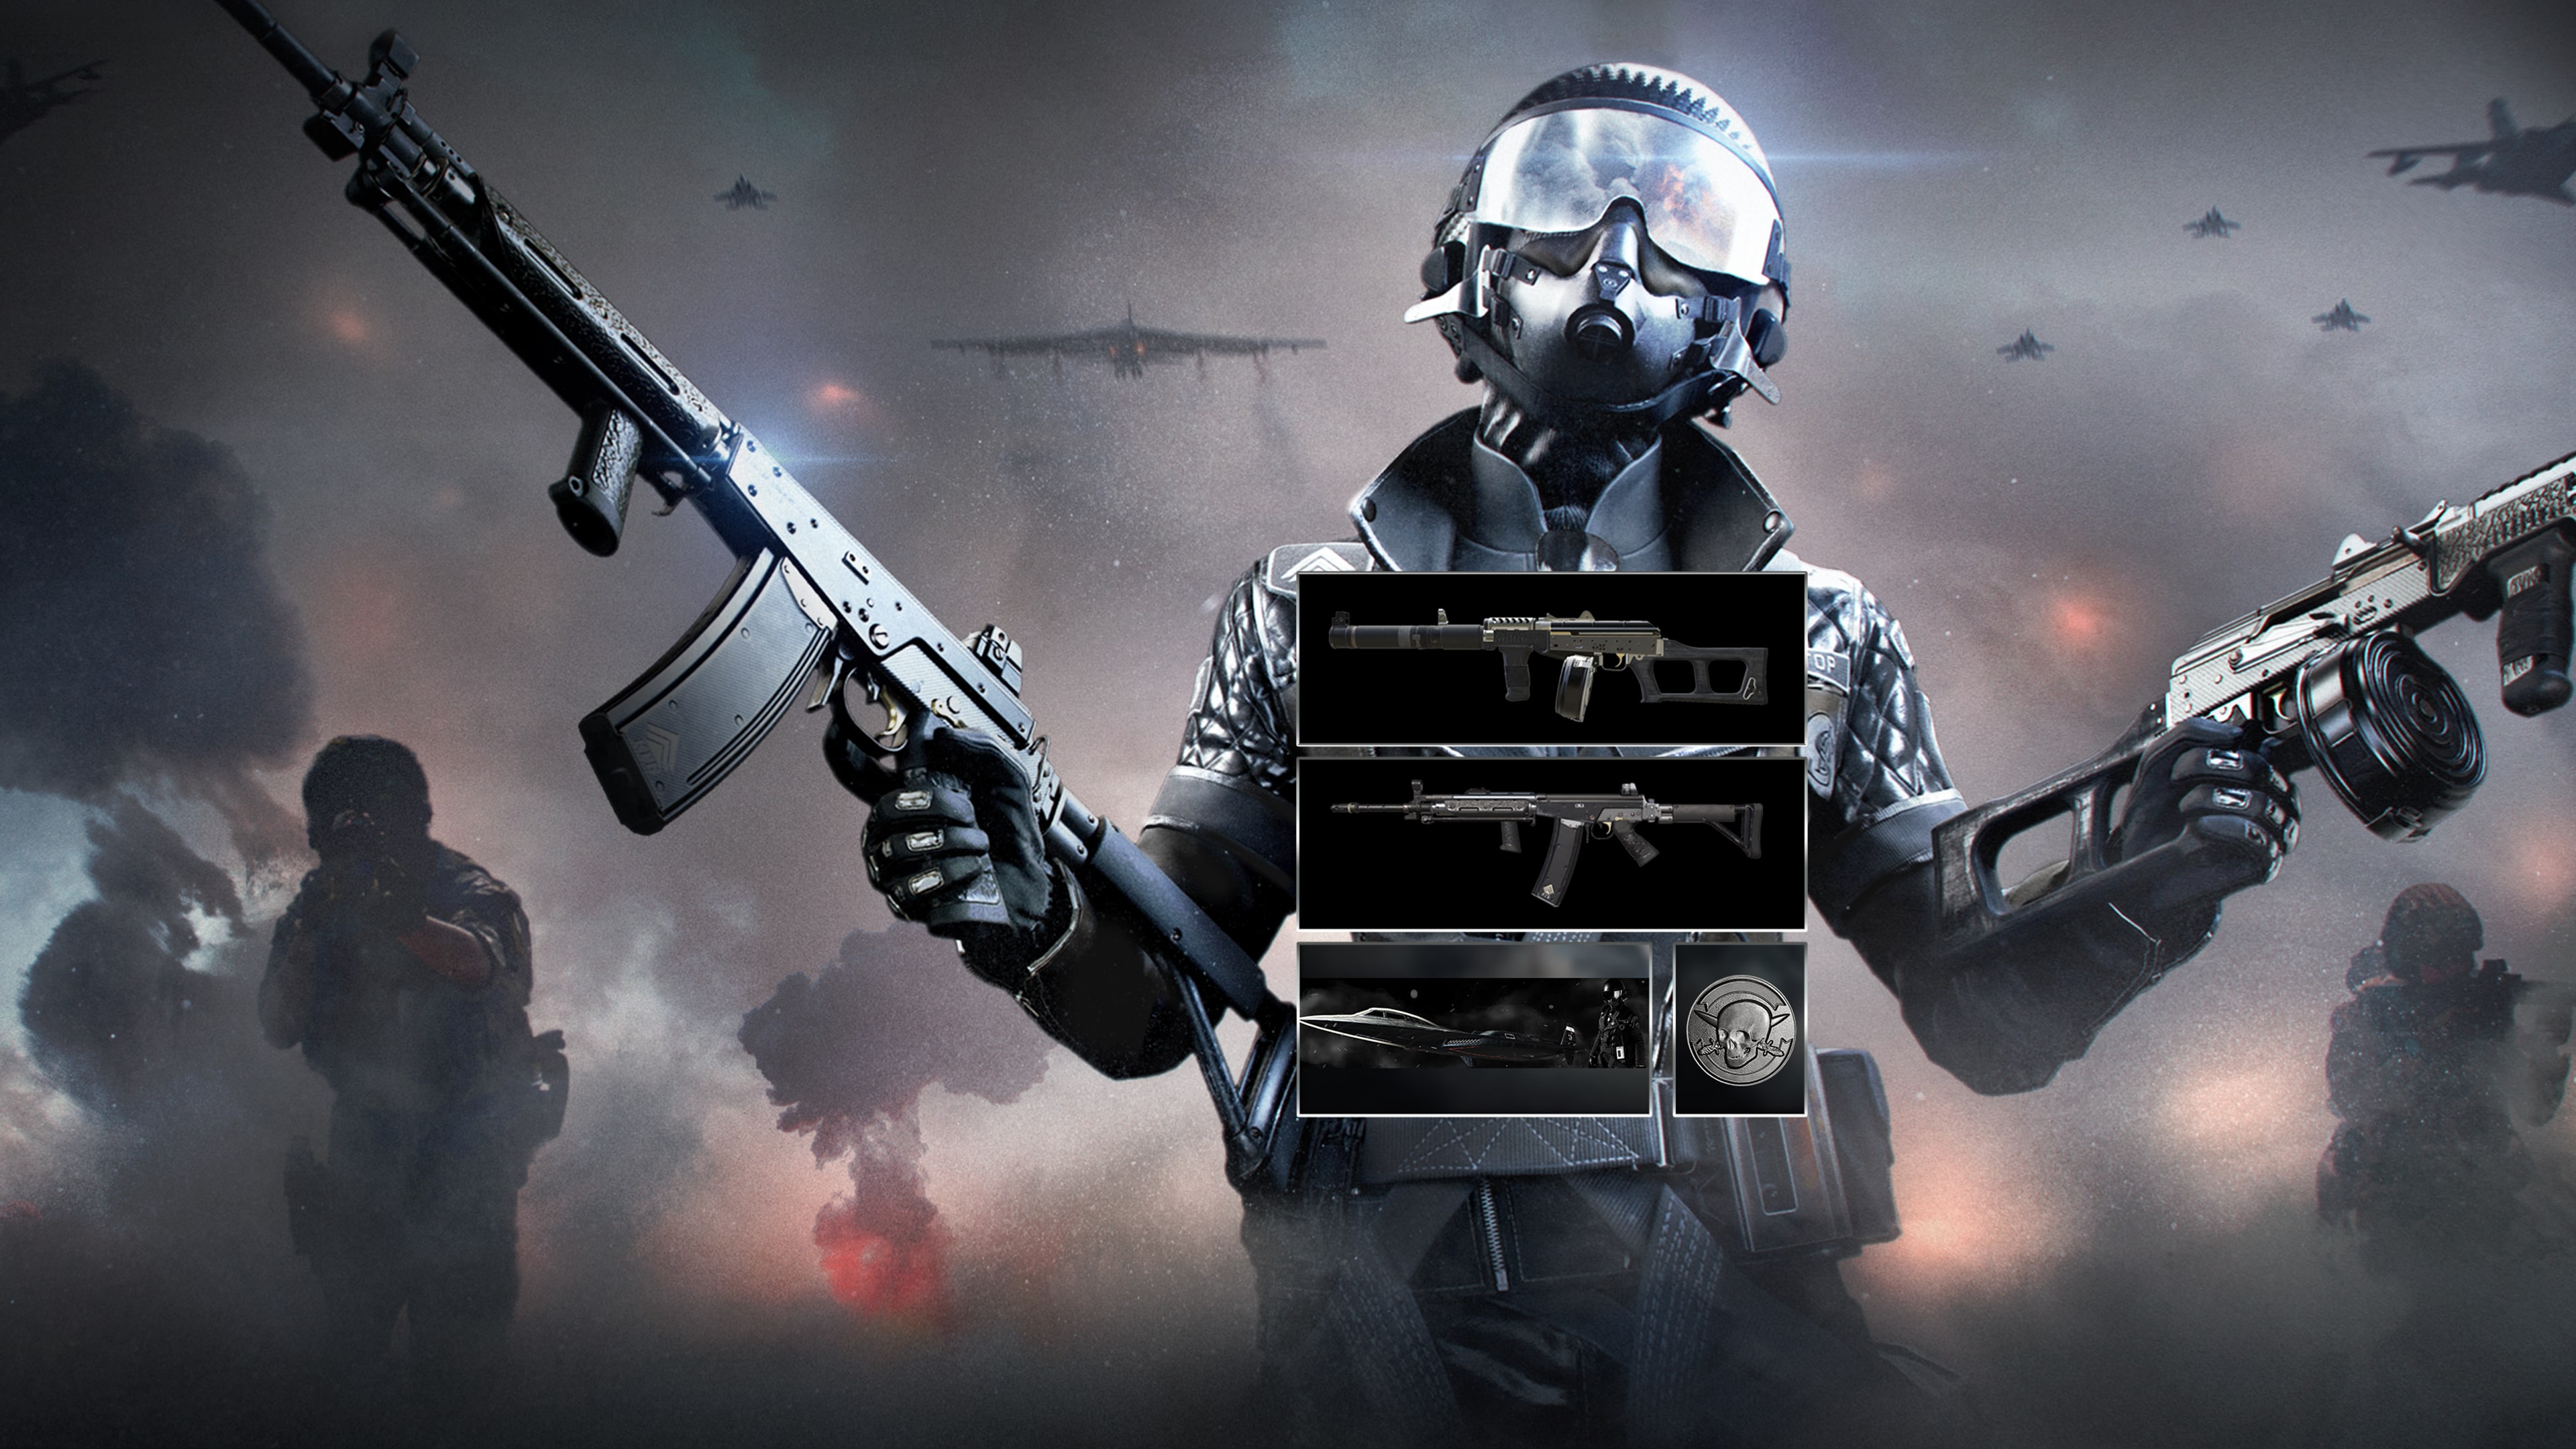 Black Ops Cold War - Spezial-Operationen: Profi-Paket